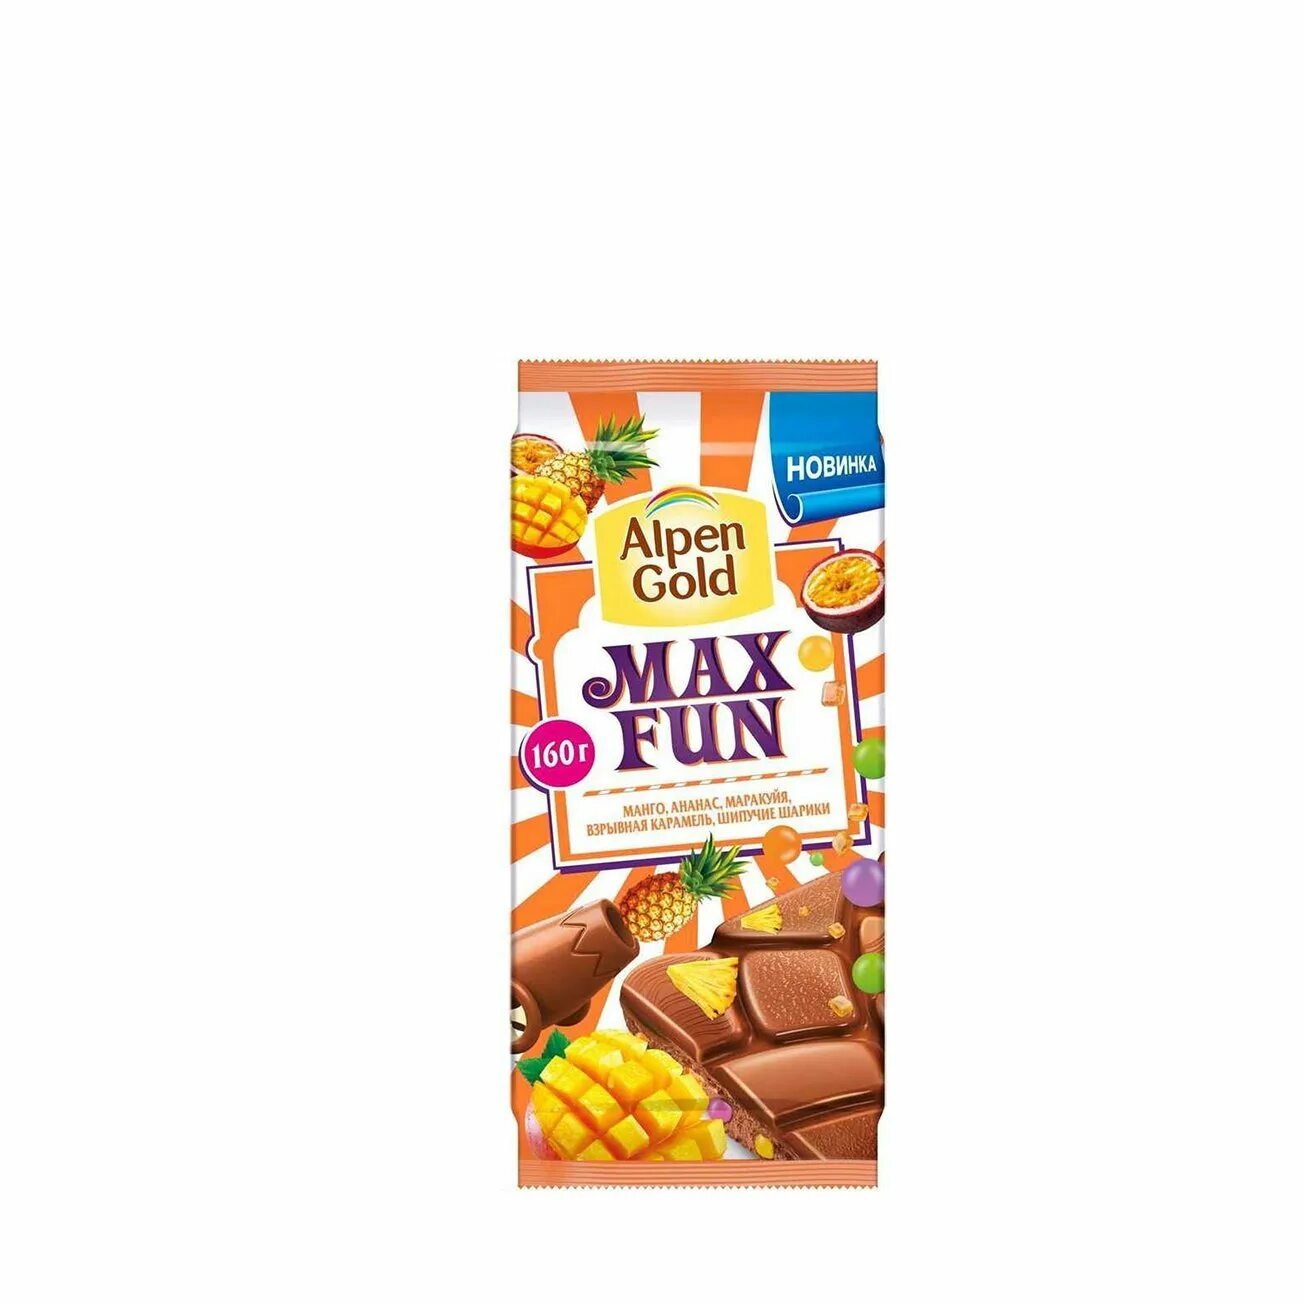 Fun mix. Шоколад Альпен Гольд Мах фан. Шоколад Альпен Голд МАКСФАН взрывная карамель 150г. Шоколад Альпен Голд Max fun, взрывная карамель, 160 г. Альпен Гольд шоколад Макс фан взрывная карамель.